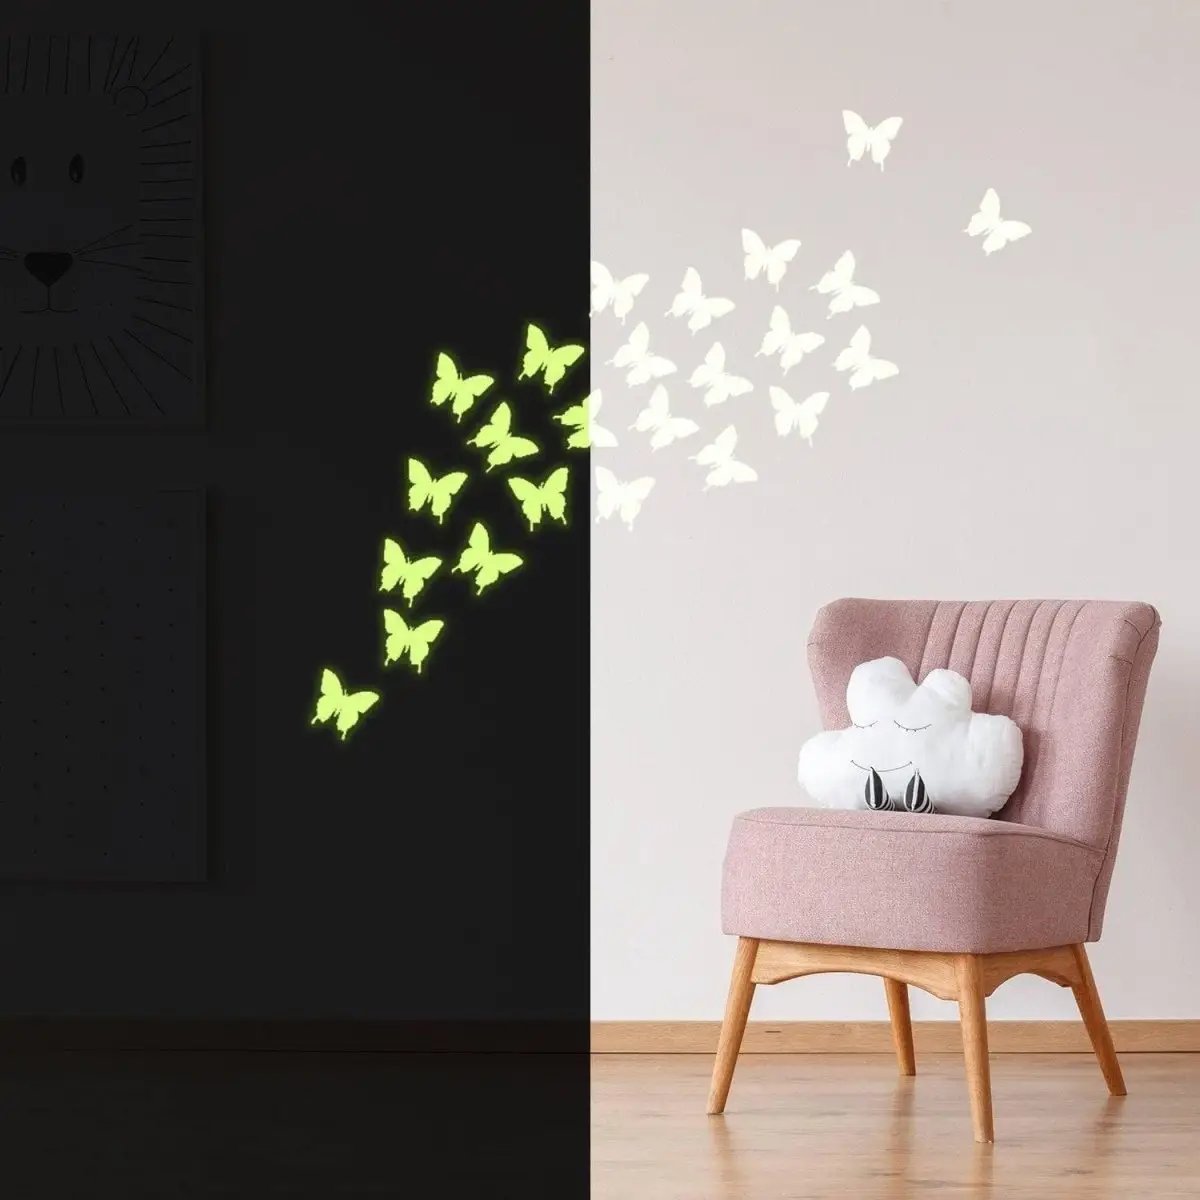 Glowing Night Butterflies Wall Decal - Enchanting Nature Illumination - Decords